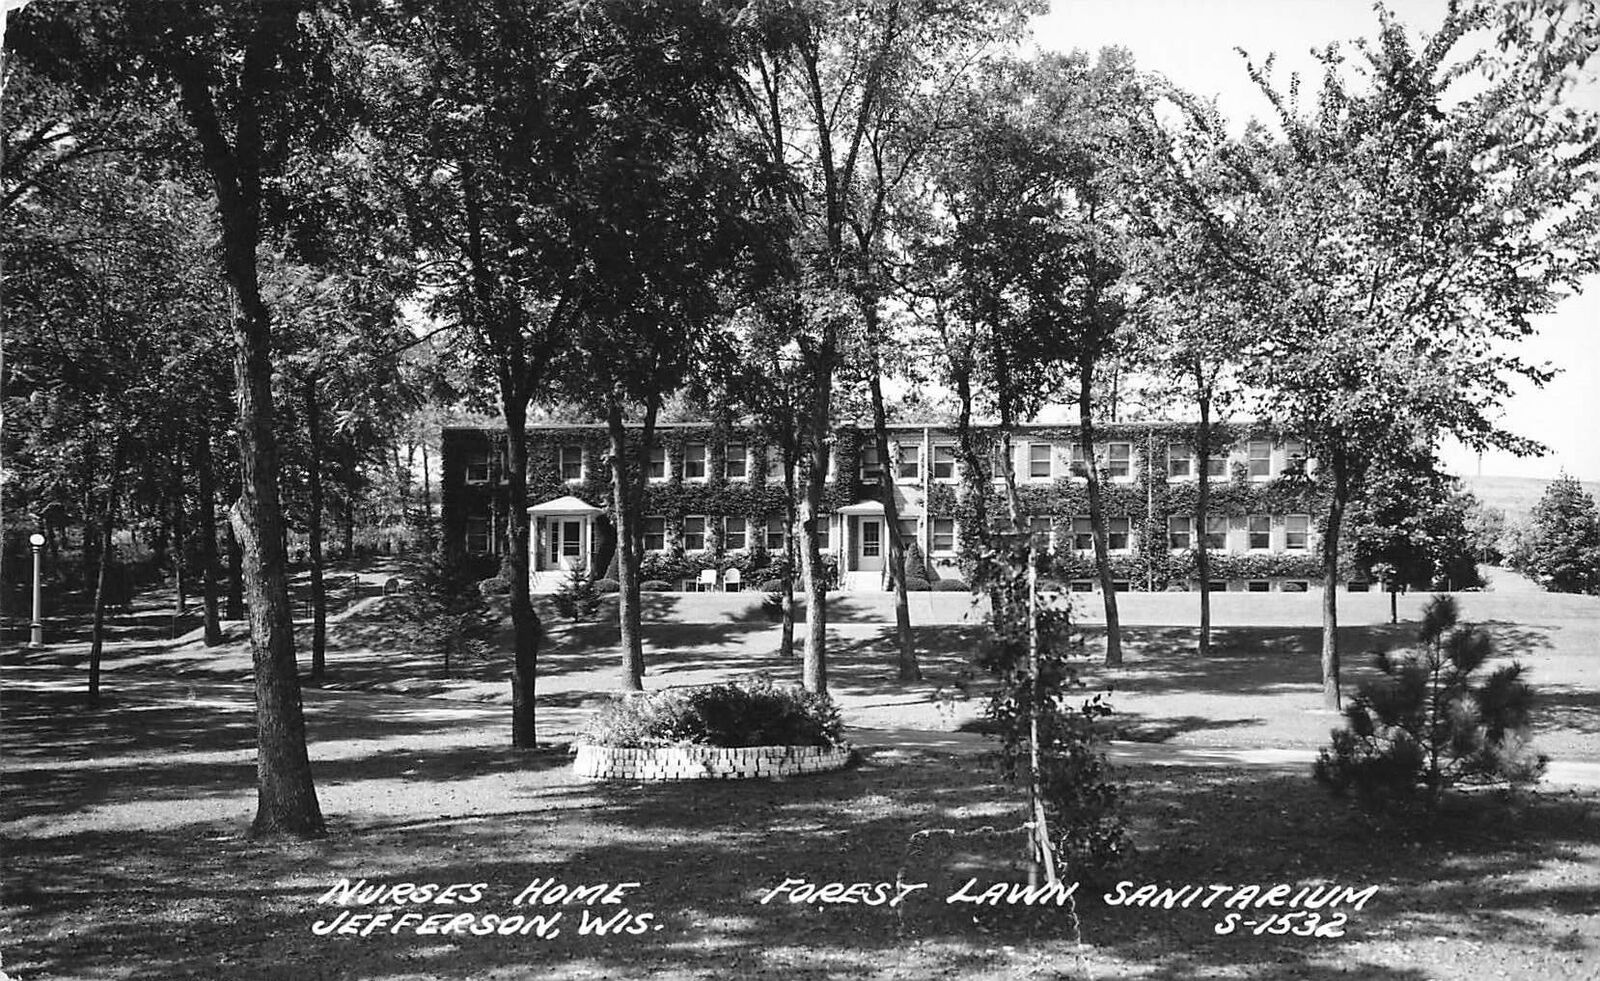 RPPC Nurses Home, Forest Lawn Sanitarium, Jefferson, Wis. Real Photo Postcard